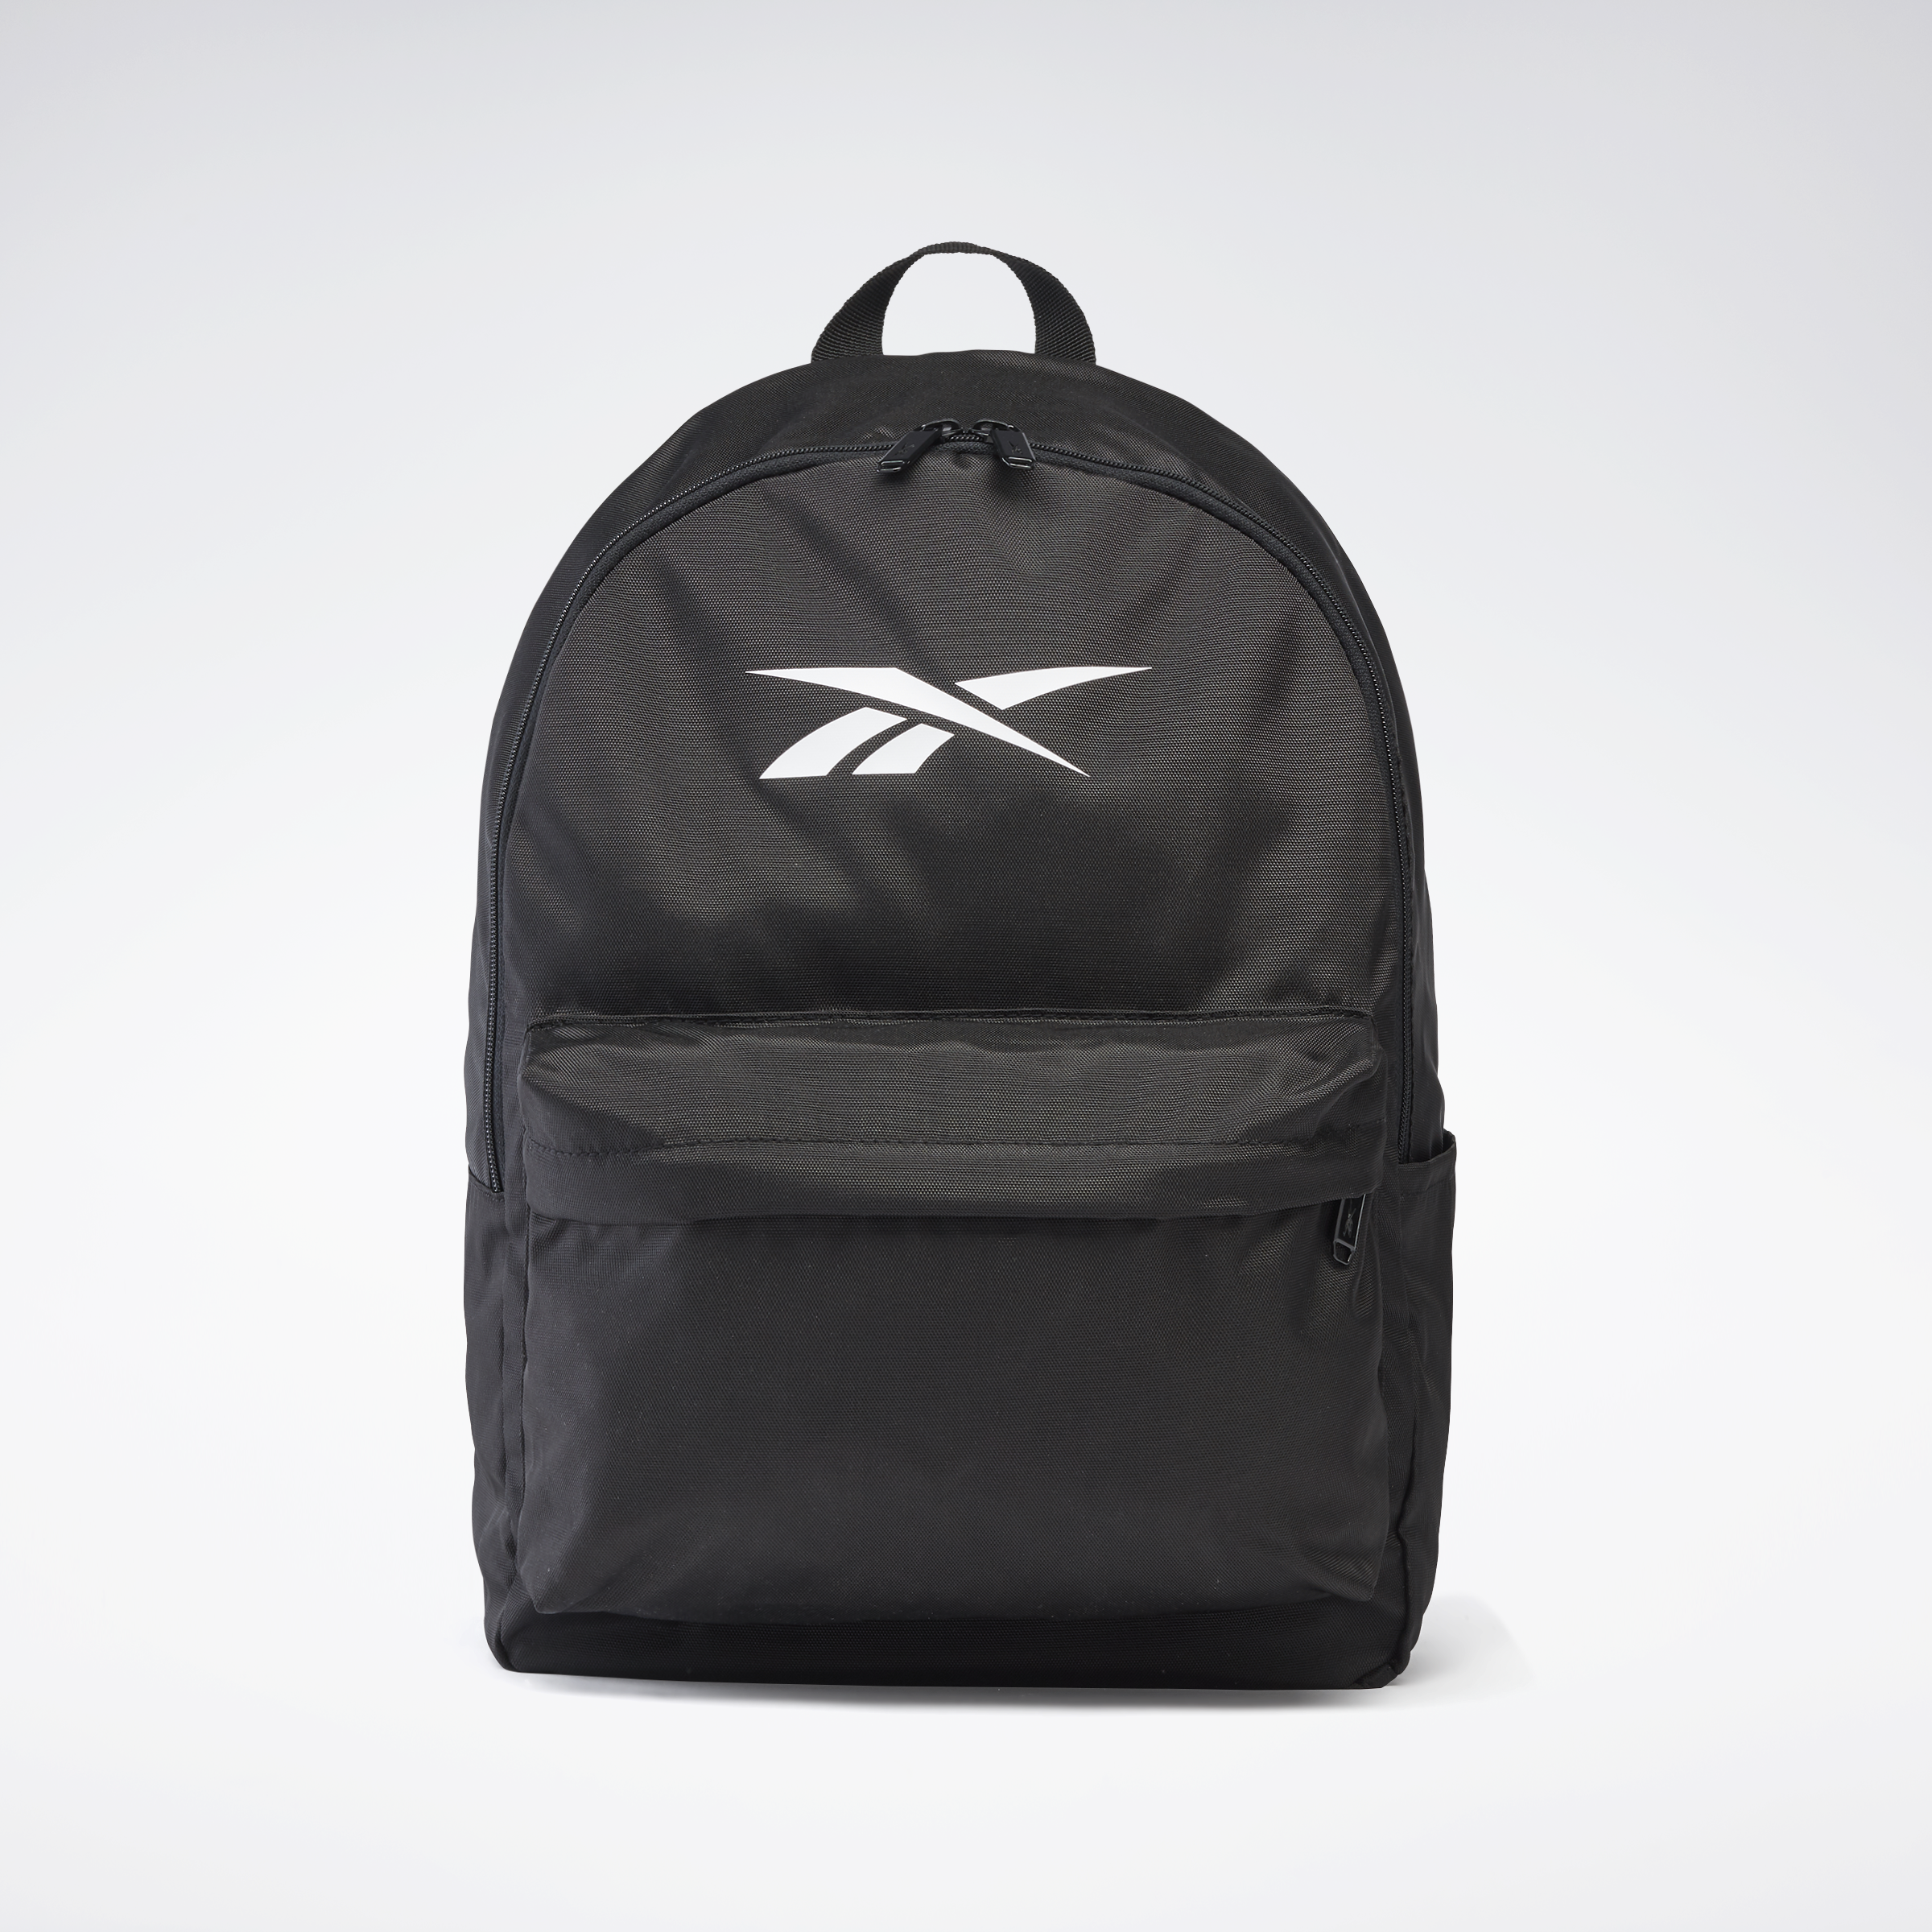 Reebok Backpack Ocean Laptop/ Book Sleeve H17.5” x W11.5”x D5.5” | Reebok,  Small duffle bag, Womens backpack